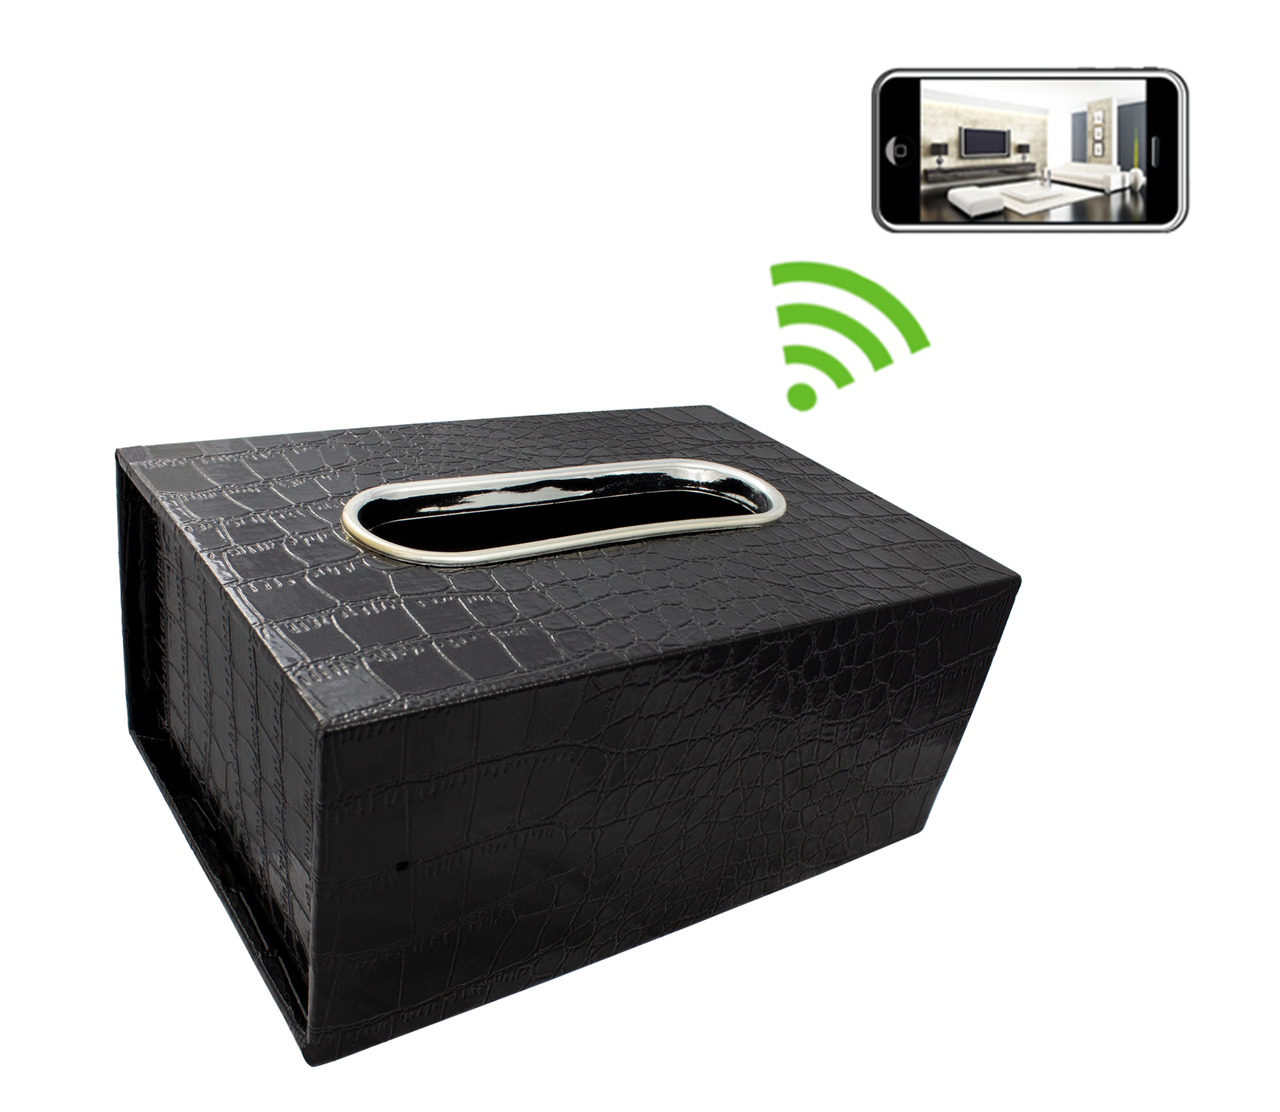 Tissue Box Hidden Camera with DVR 1280x720